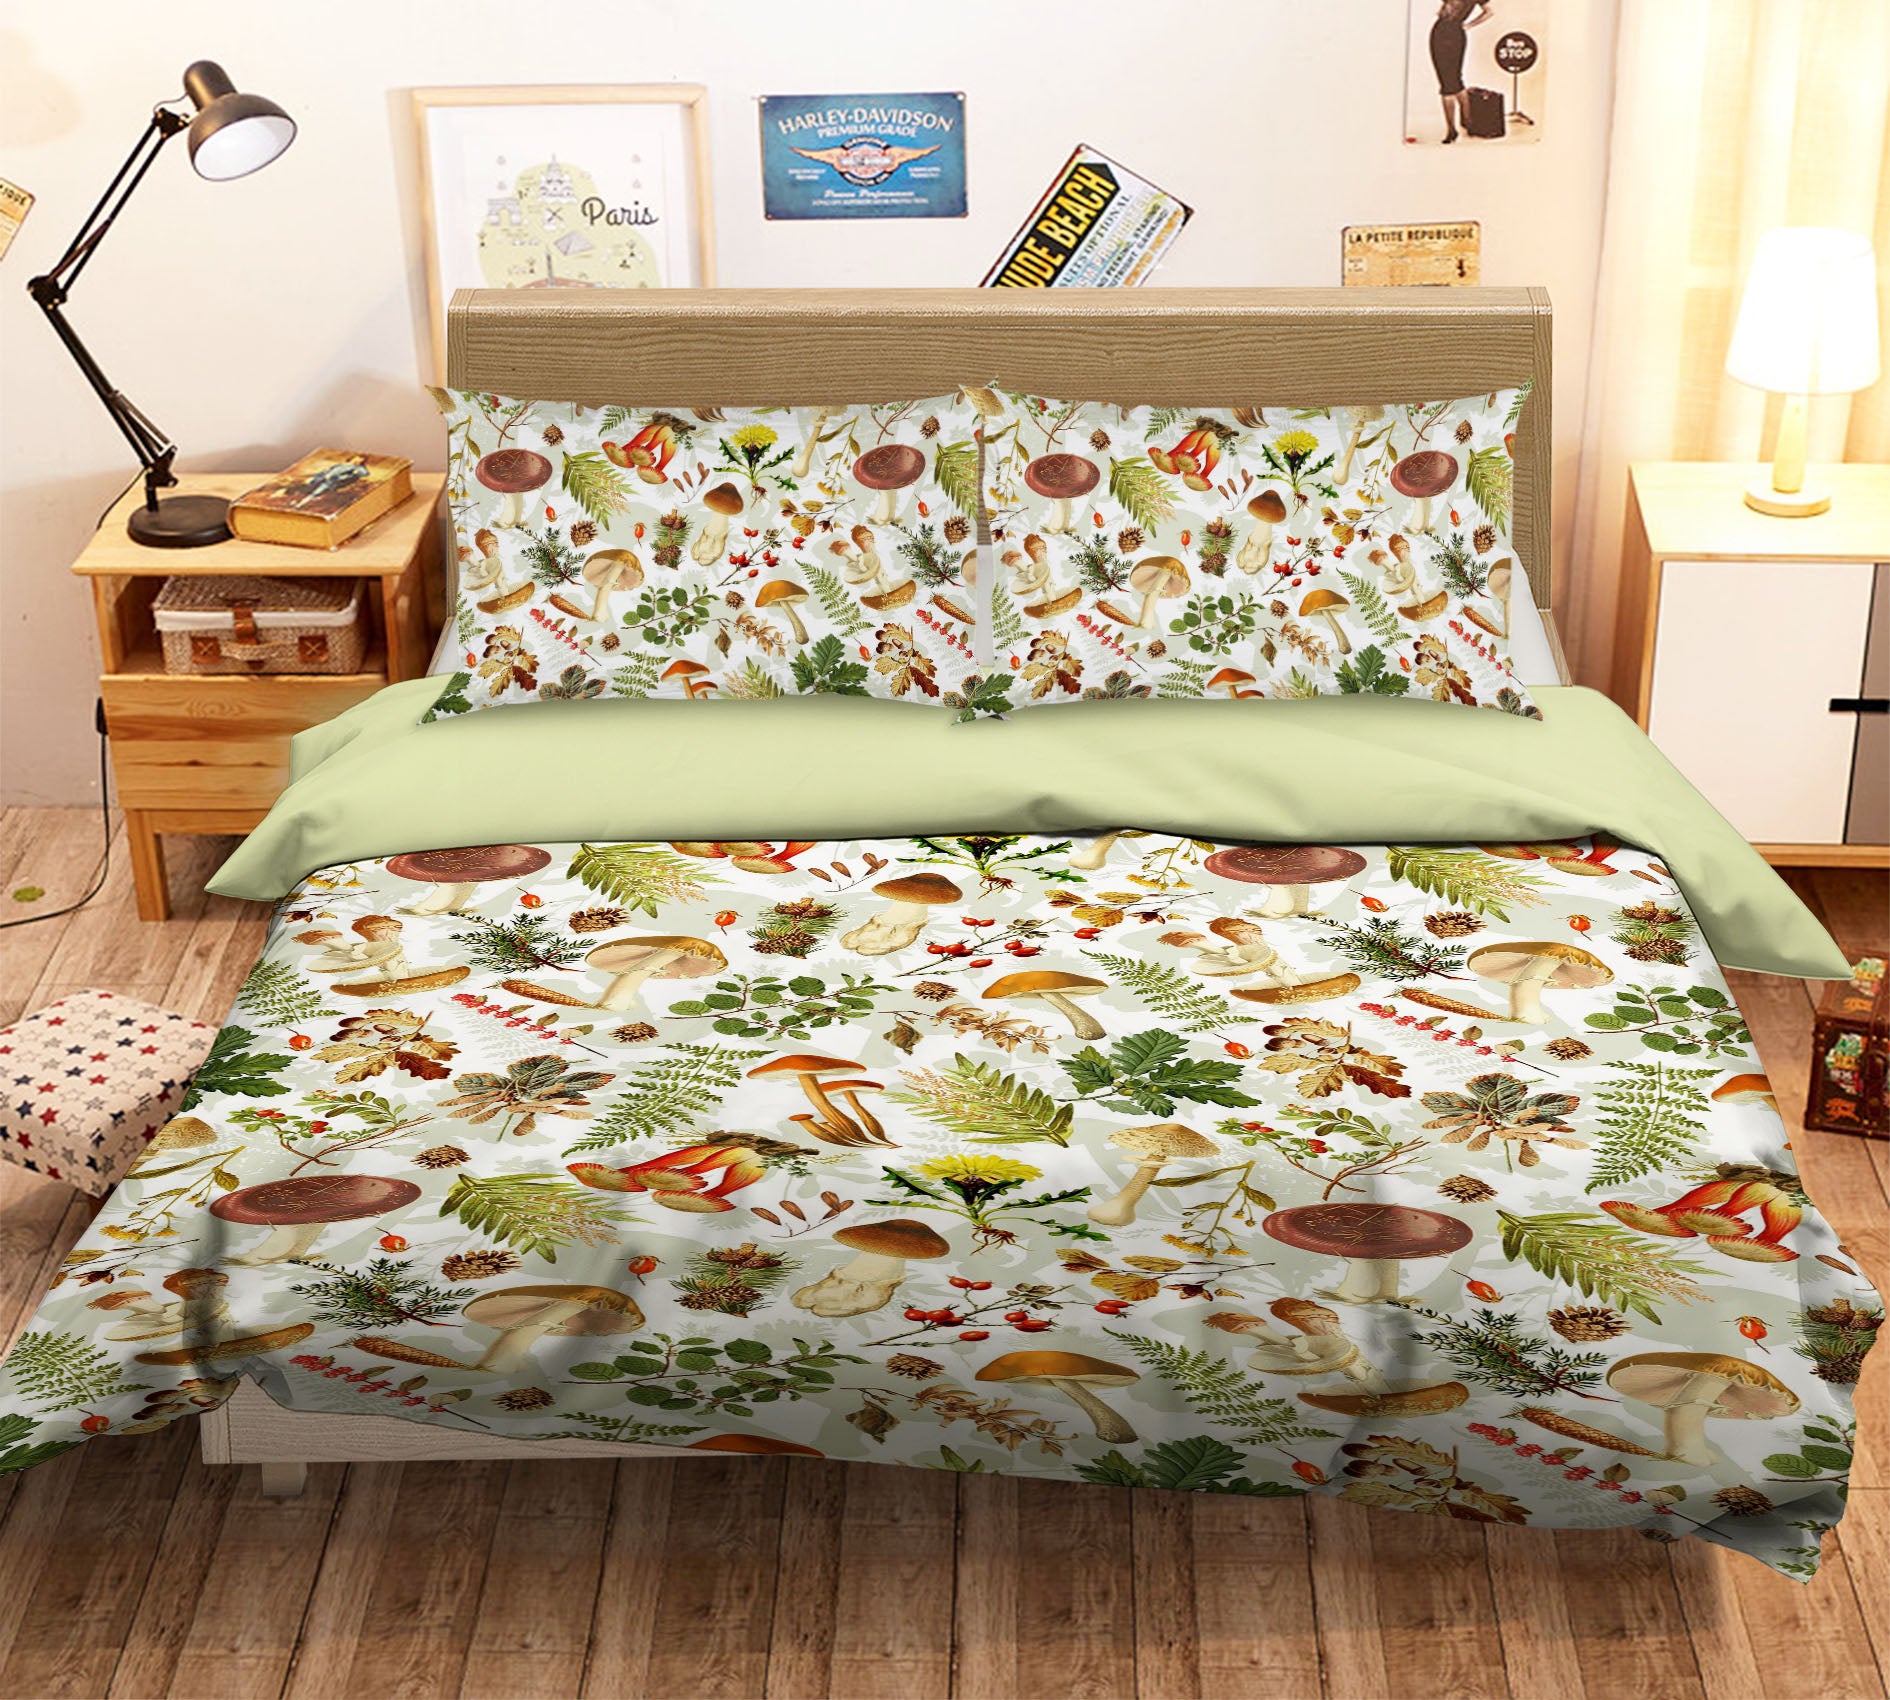 3D Mushroom Pattern 18210 Uta Naumann Bedding Bed Pillowcases Quilt